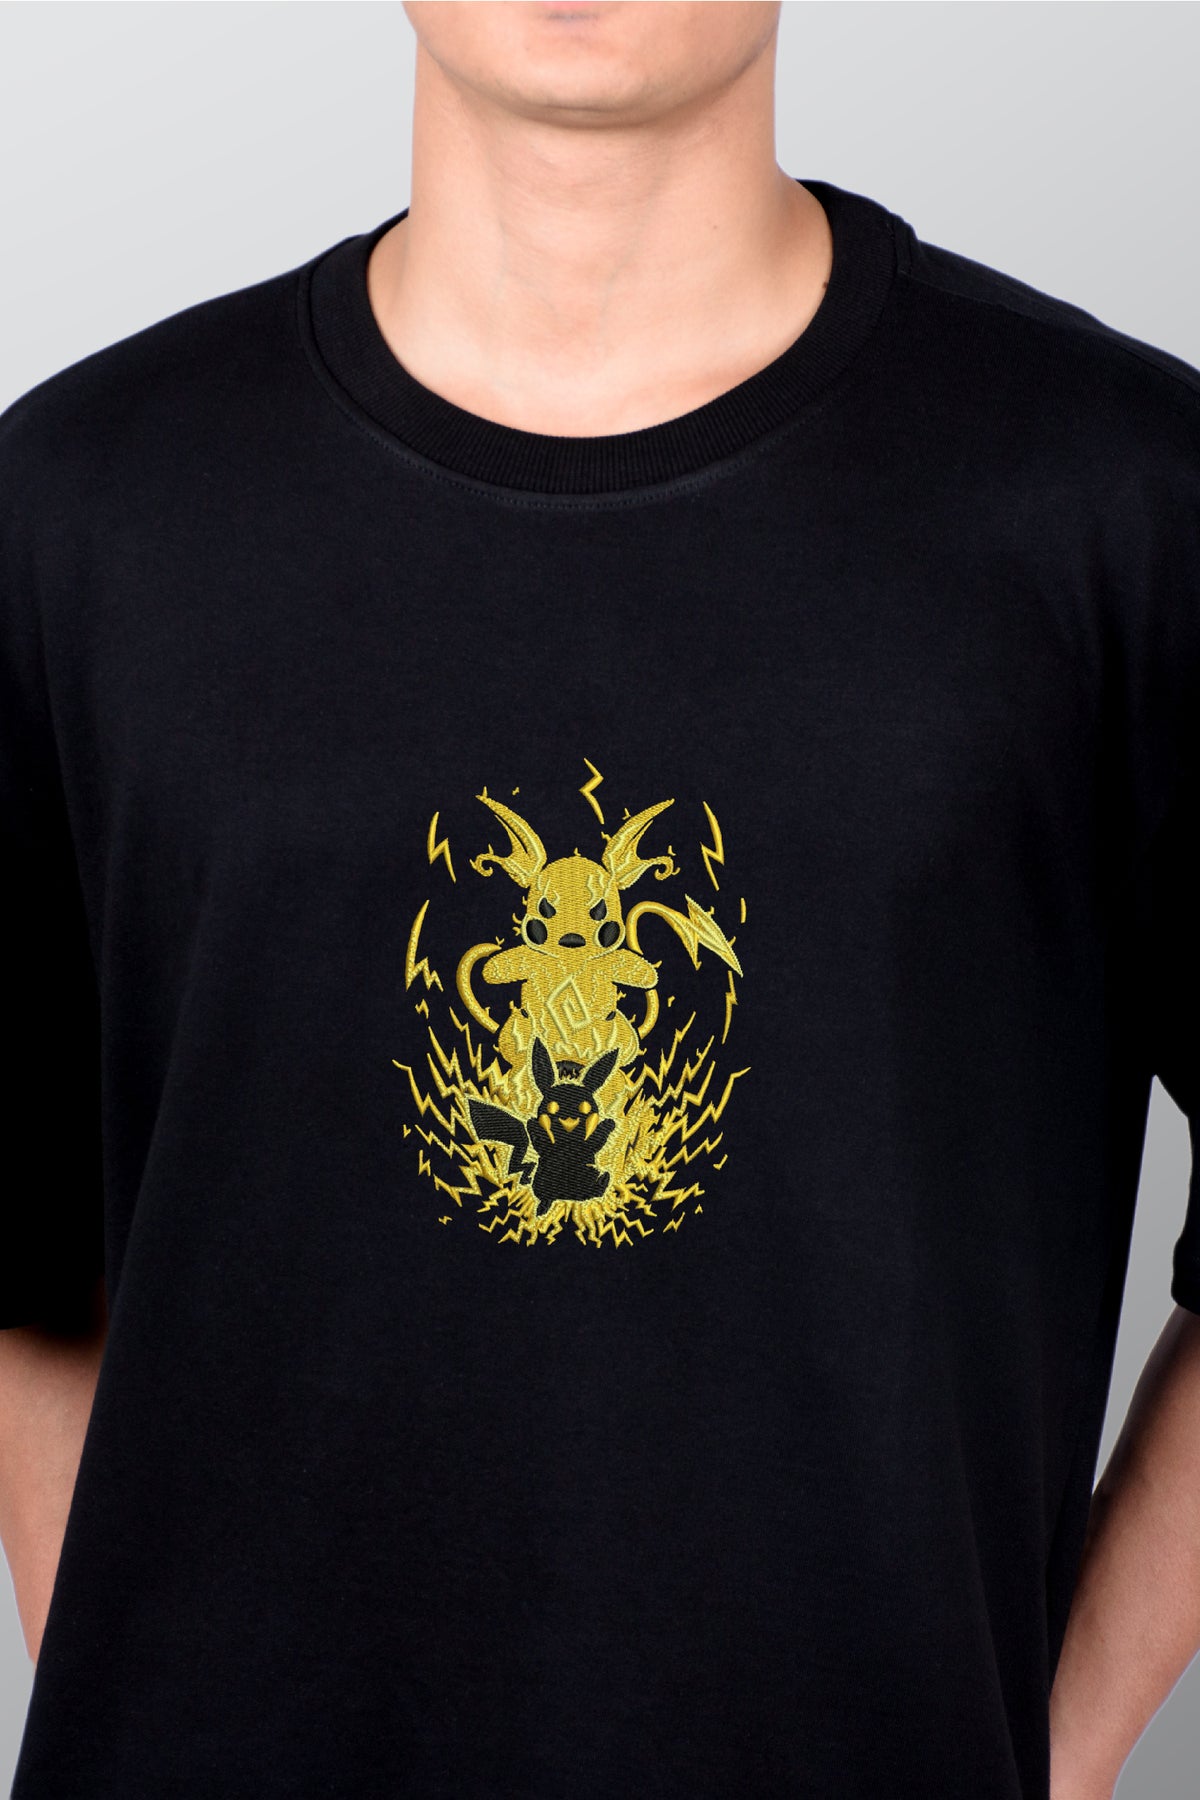 Pikachu Transform Embroidered T-shirt